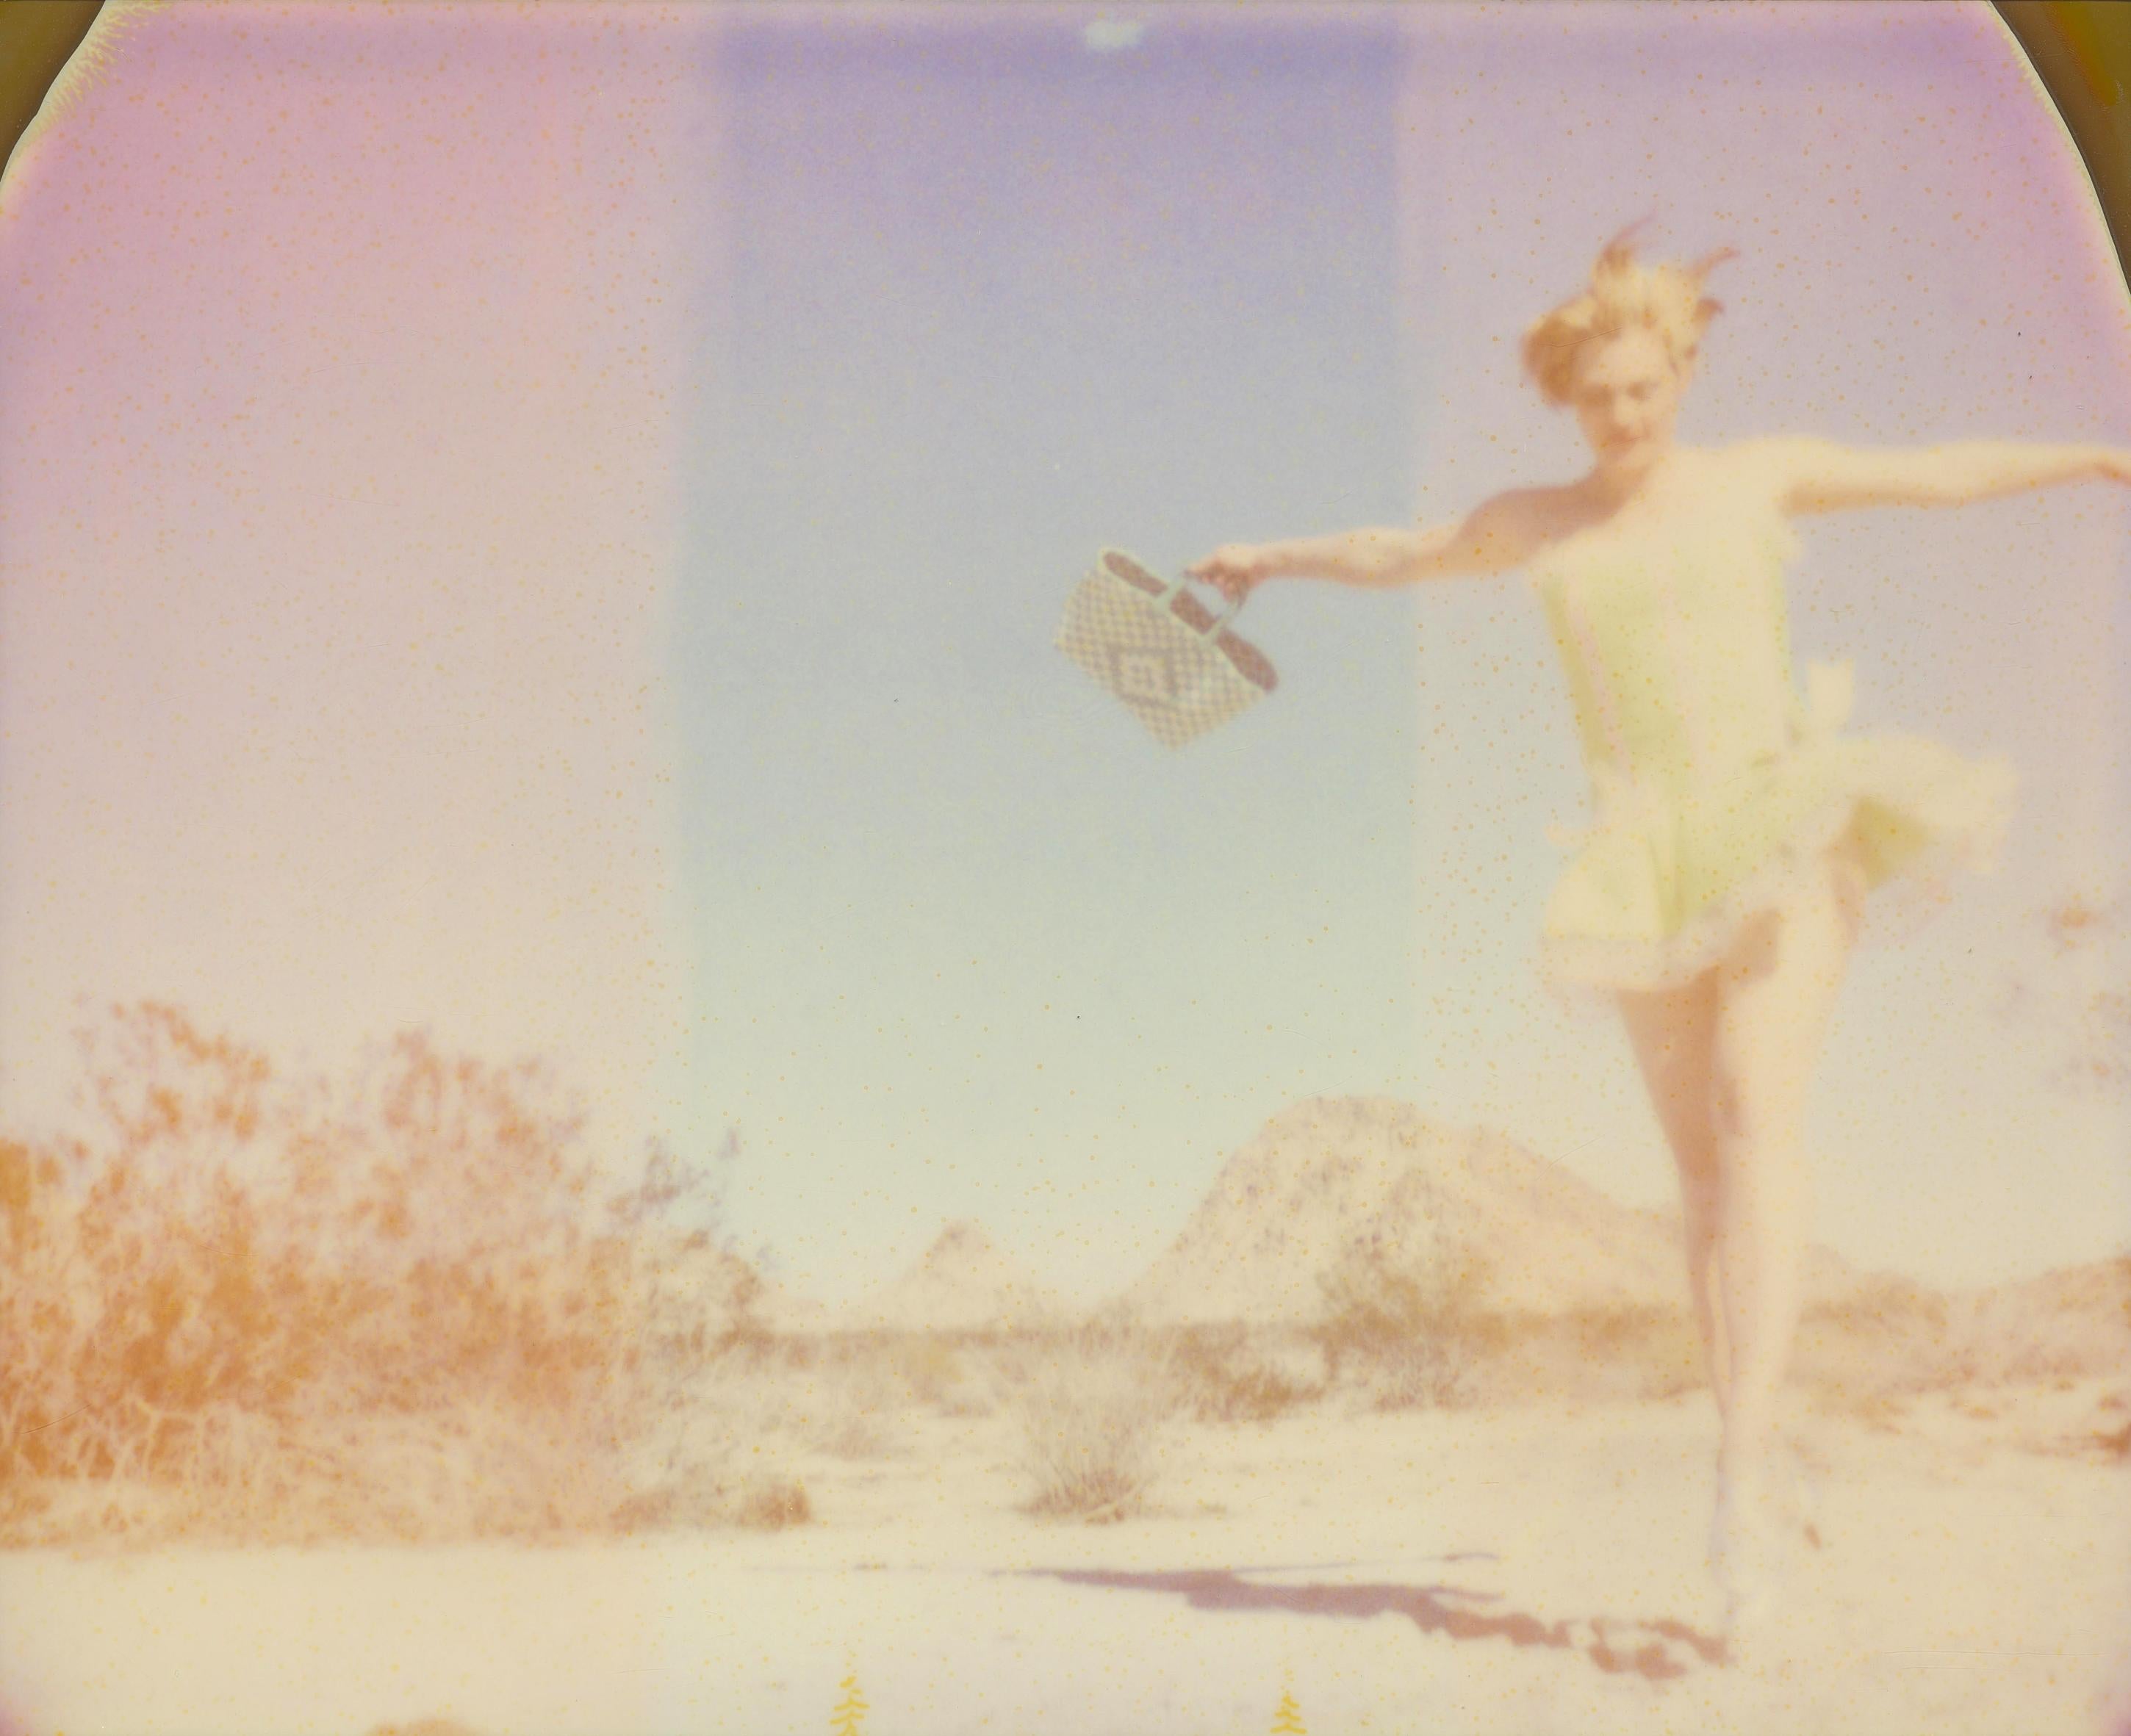 Color Photograph Stefanie Schneider - The Sound of Music (29 Palms, CA) - analogique